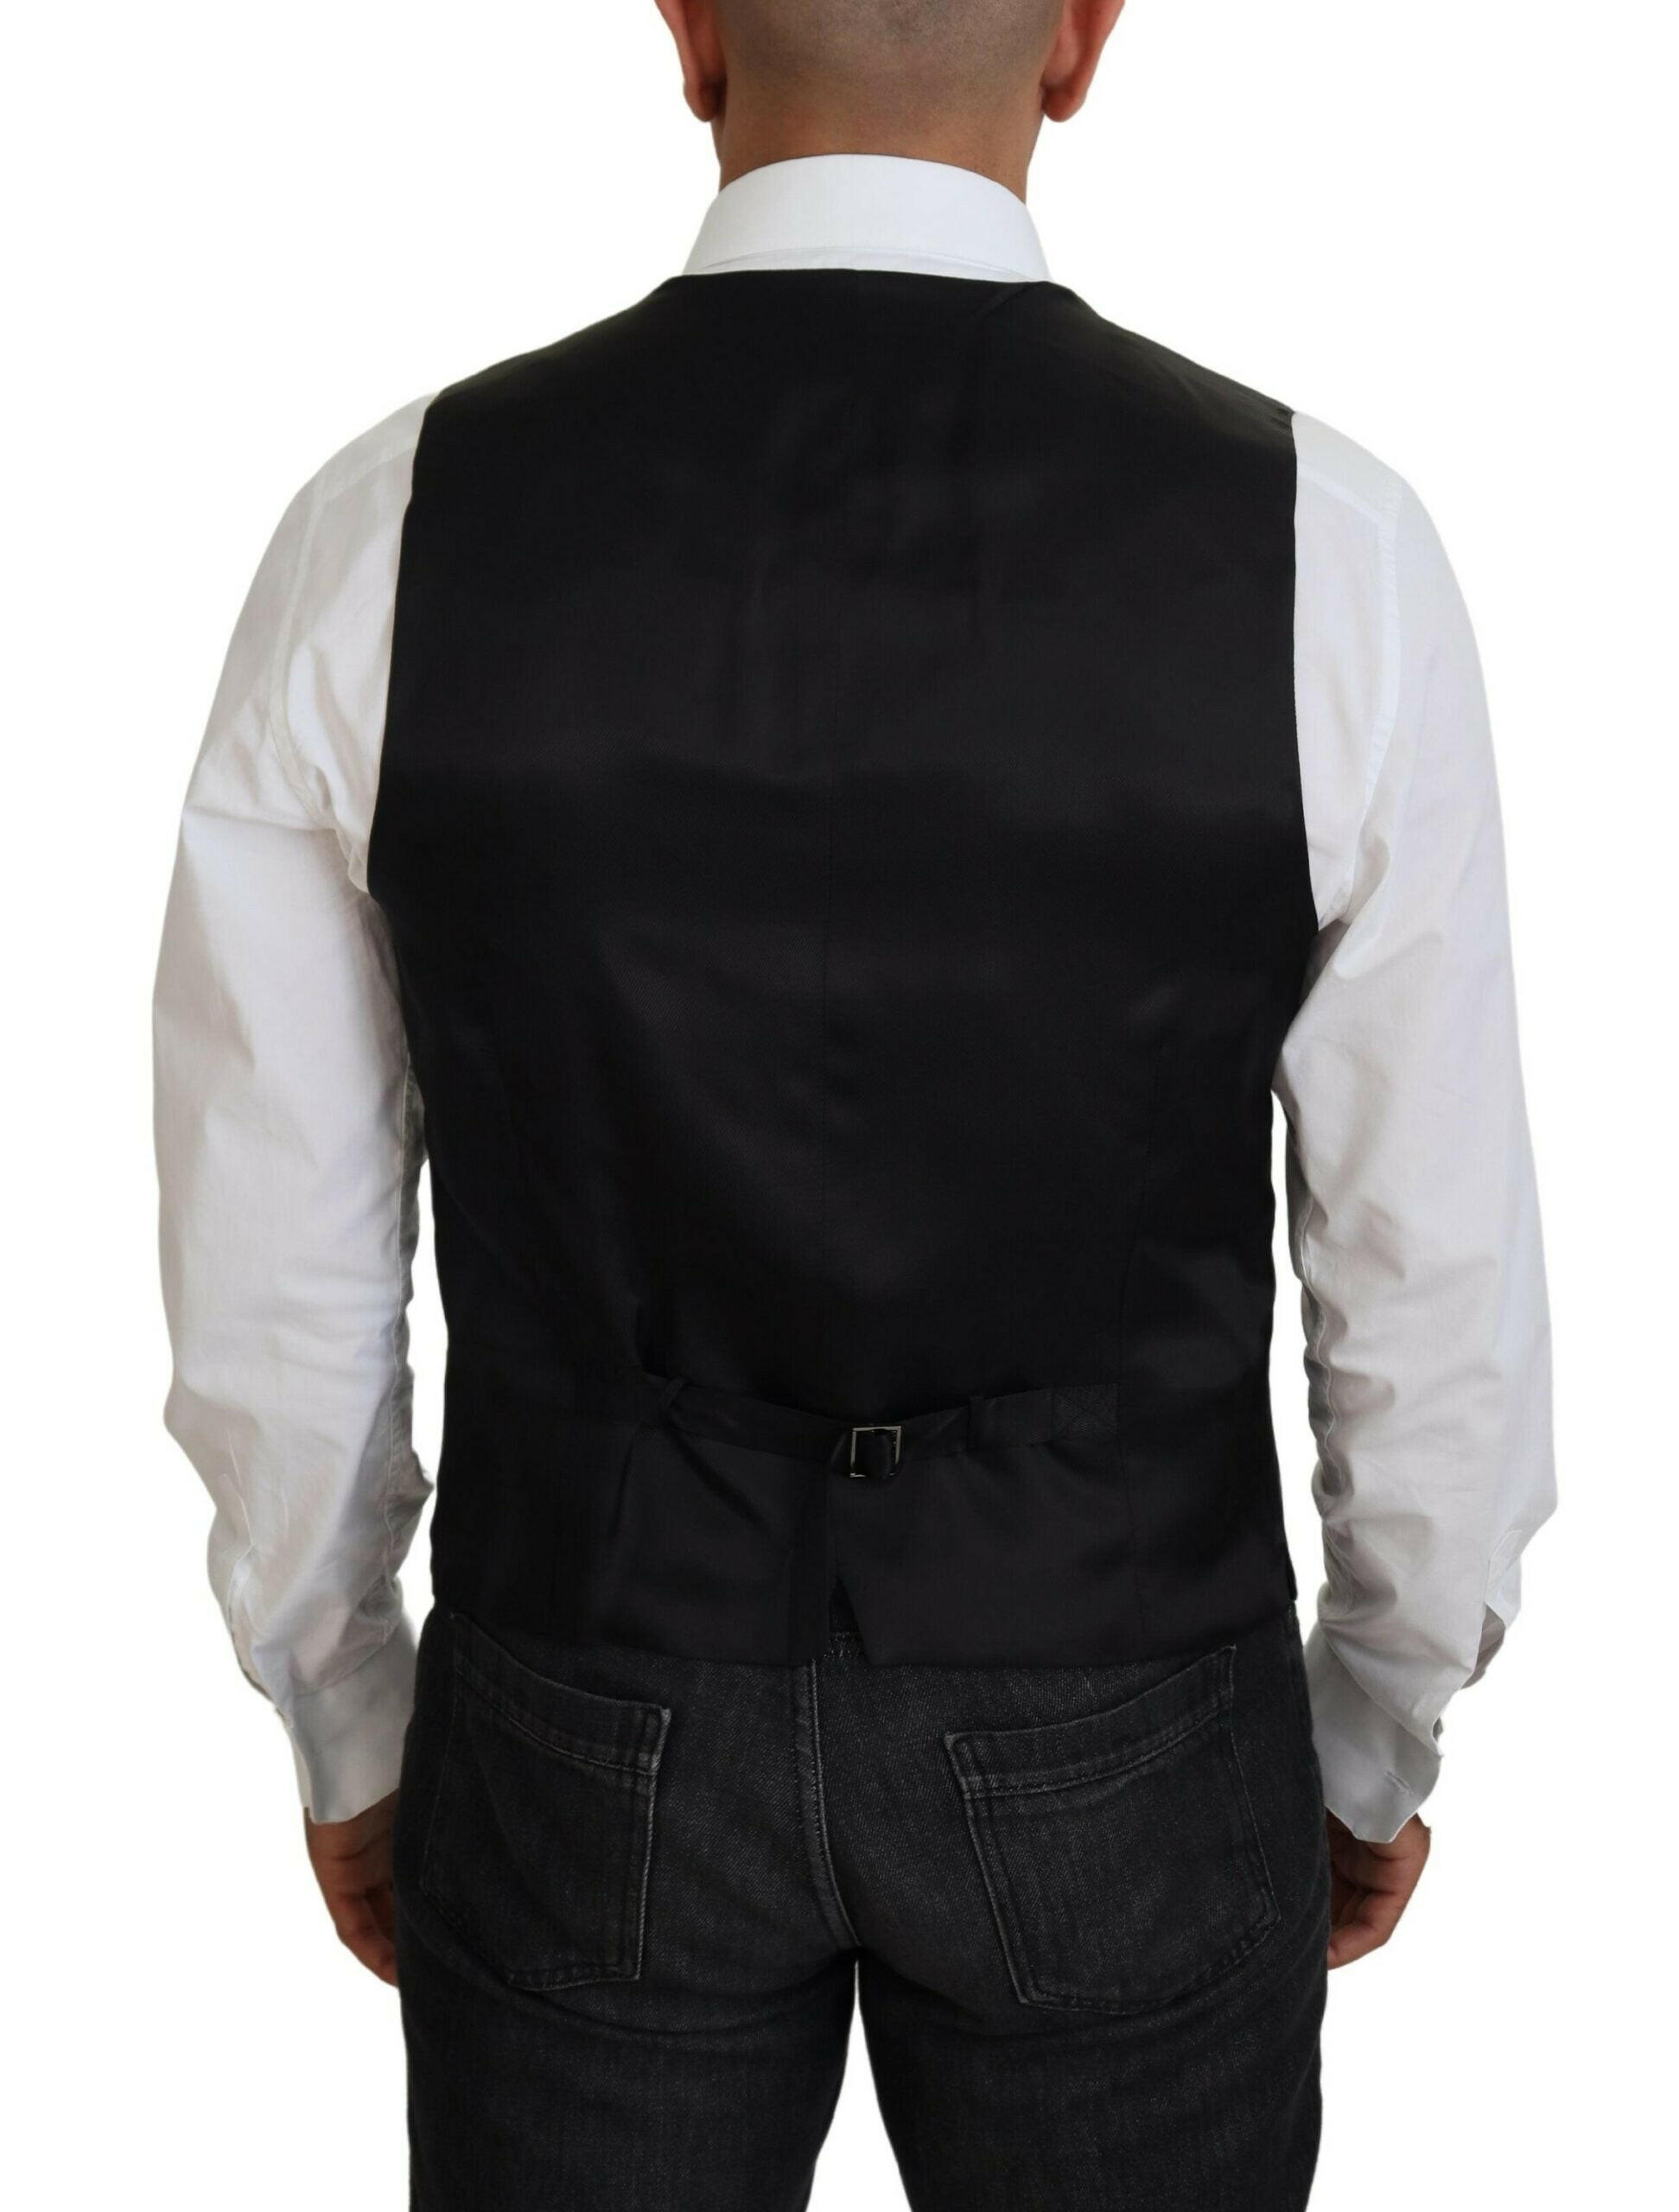 Dolce & Gabbana Black Virgin Wool Waistcoat Formal Vest - GENUINE AUTHENTIC BRAND LLC  